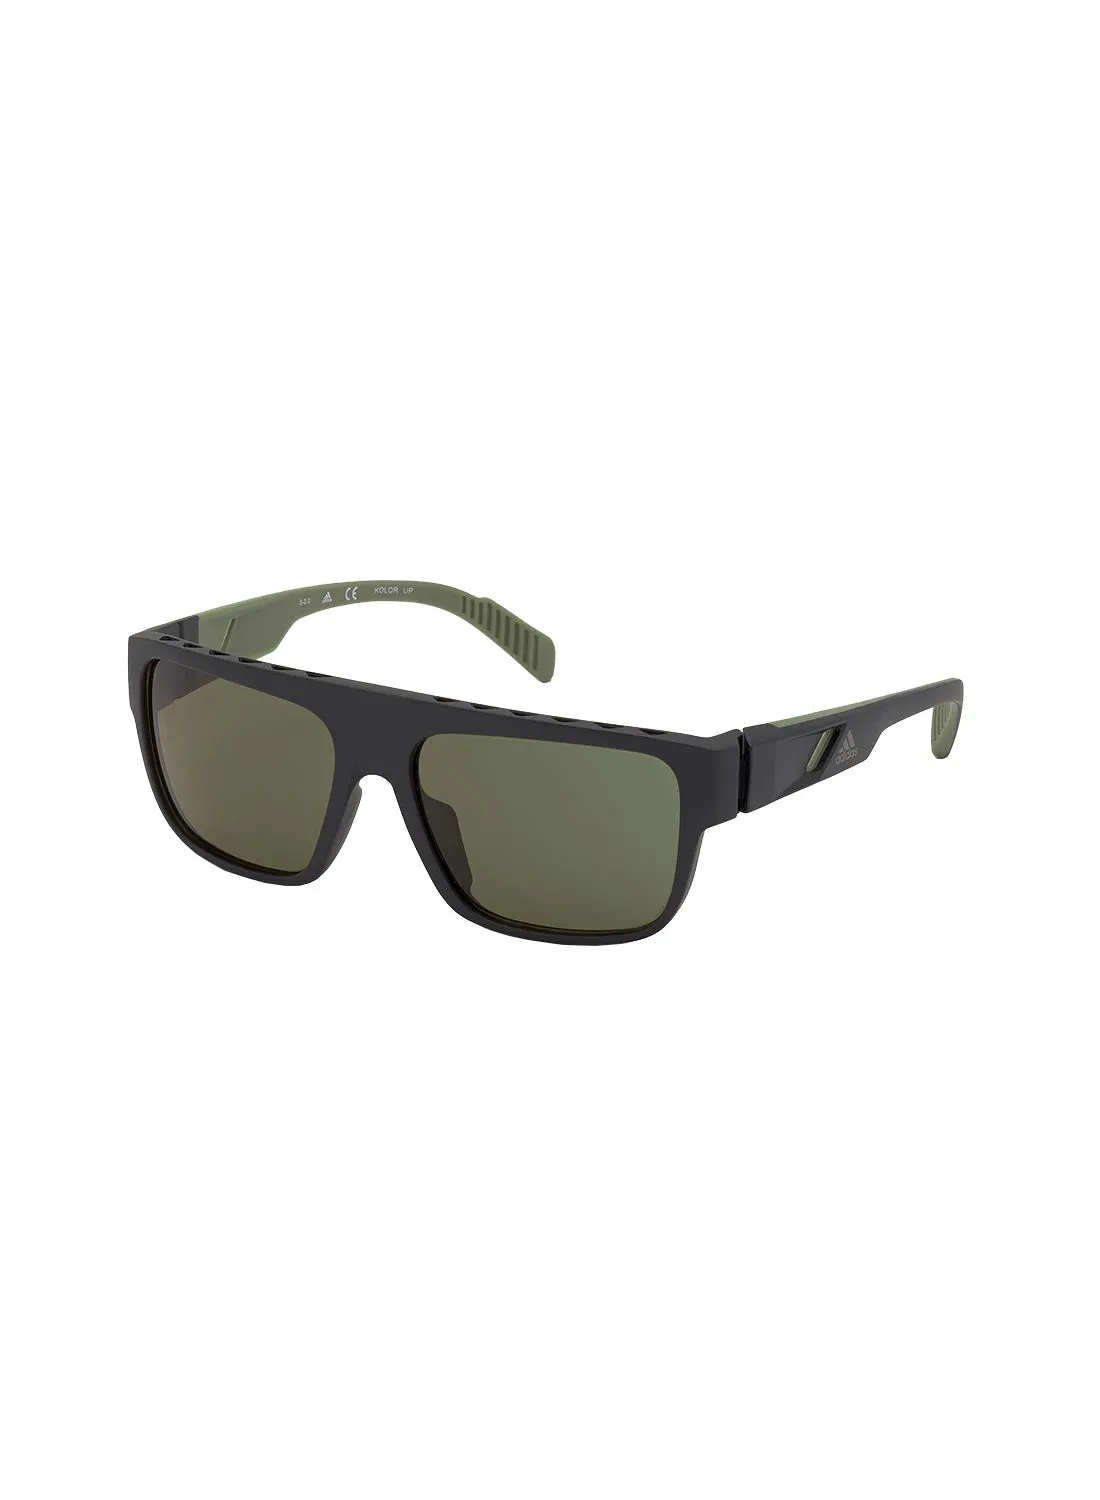 Adidas Navigator Sunglasses SP003702N59